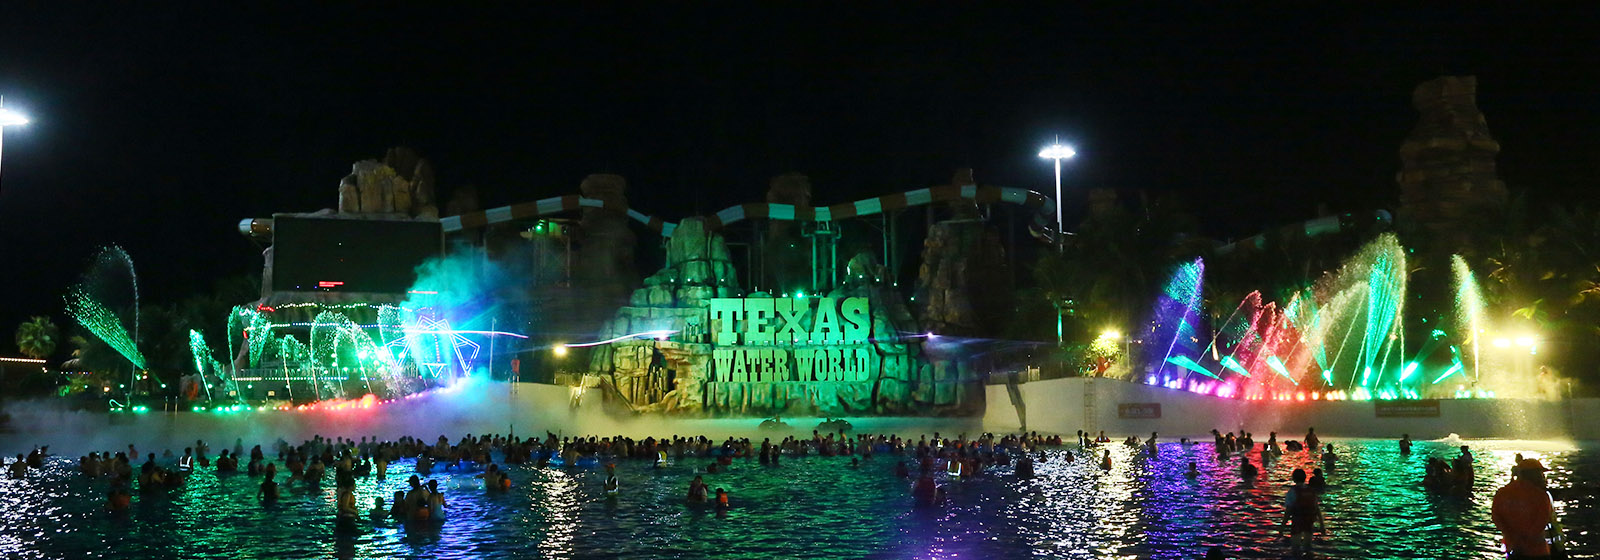 theme amusement park and aquatic features